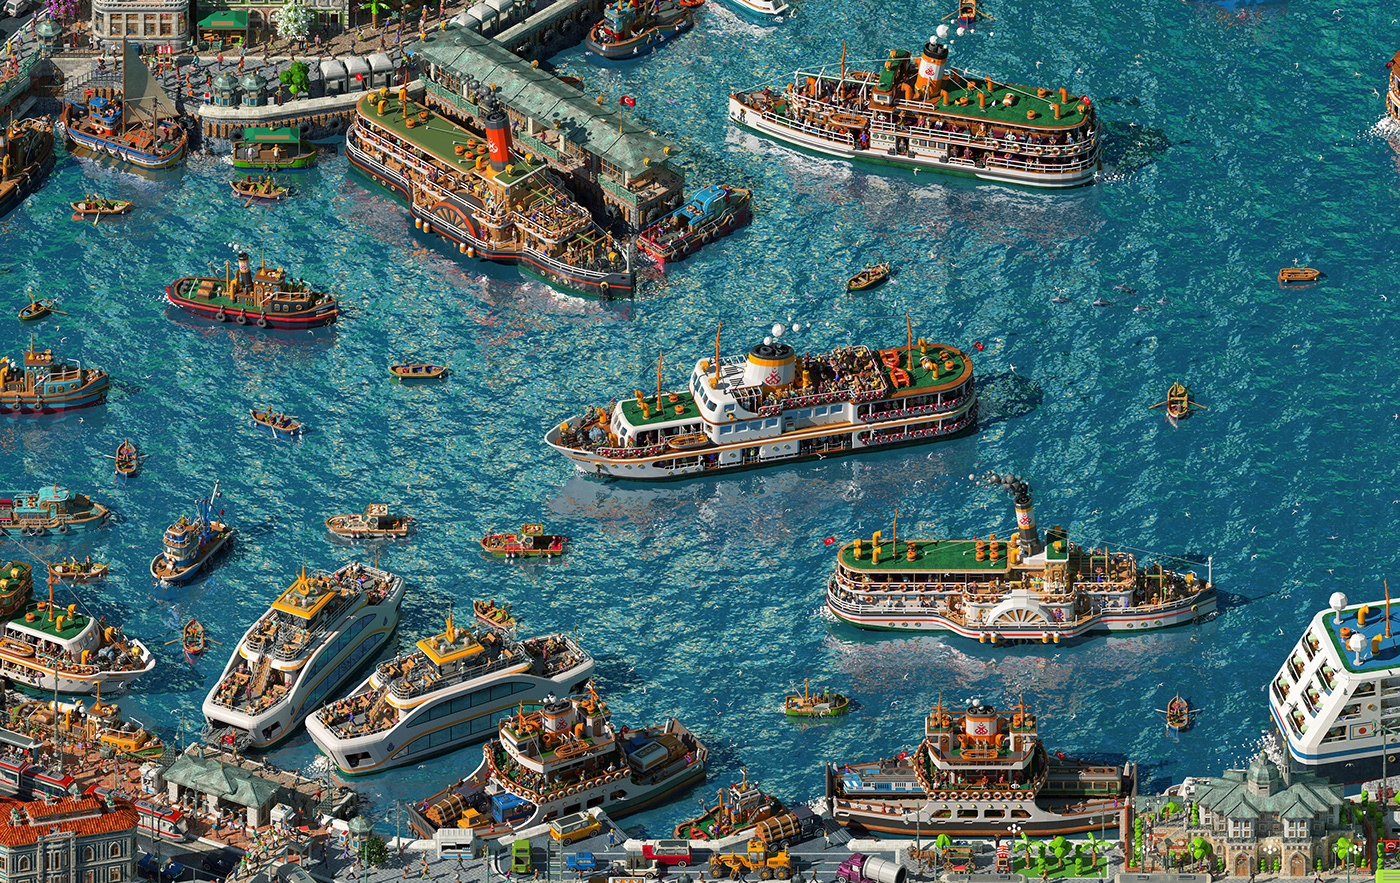 ship Turkey illustratedmap digital illustration map istanbul city Urban eminonu galatatower